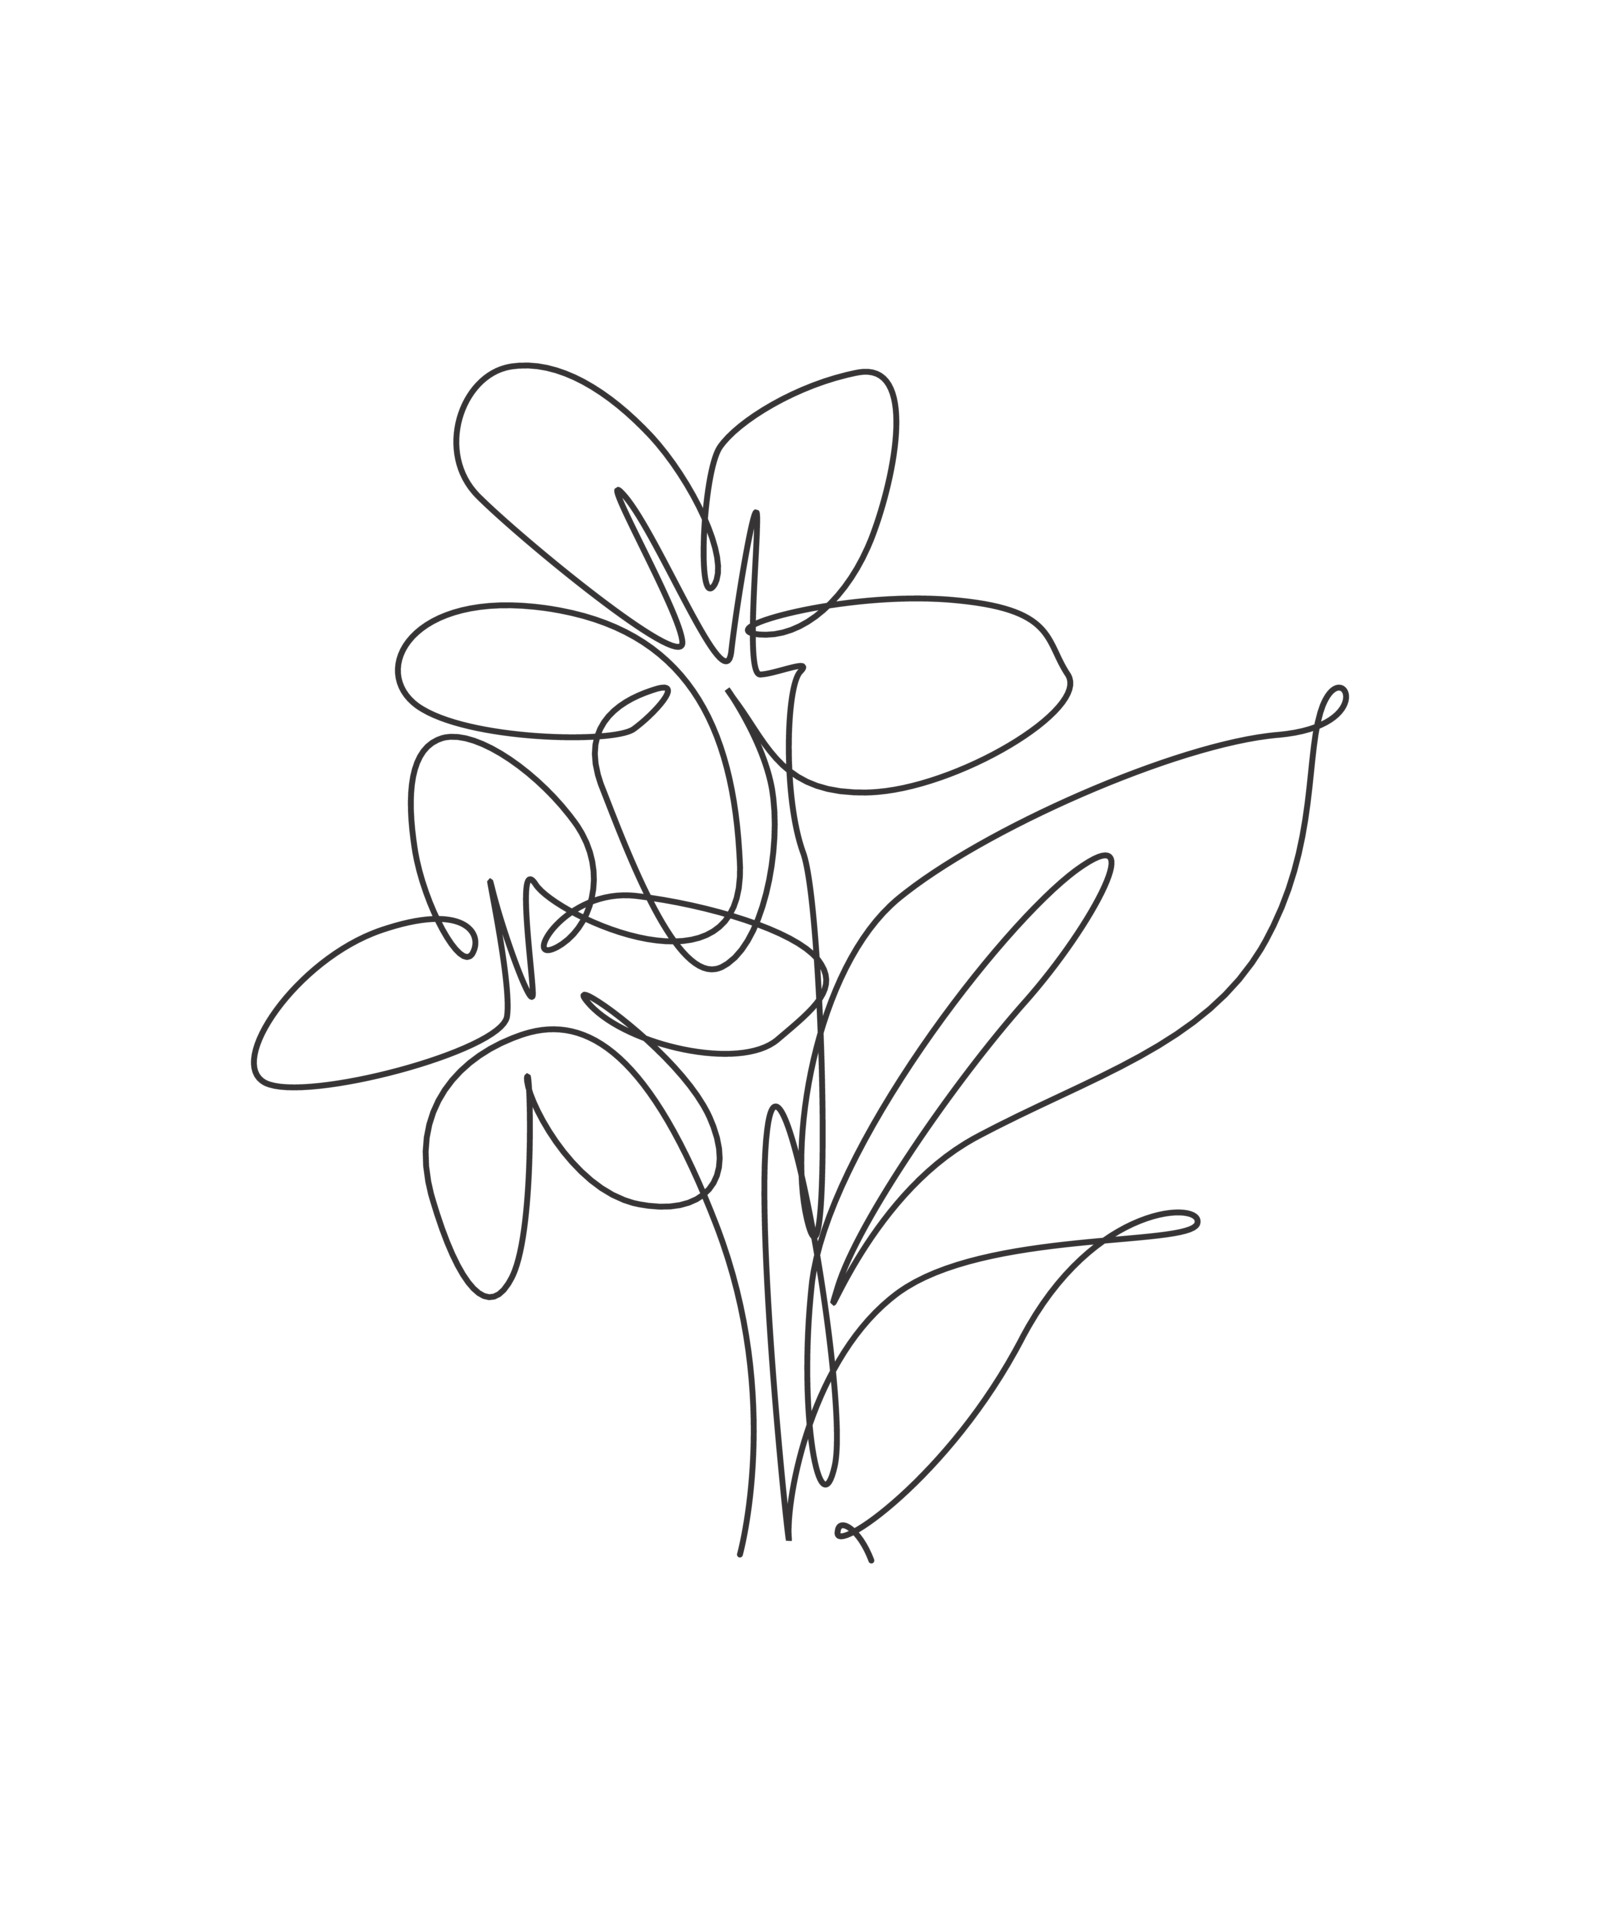 One single line drawing beauty jasmine flower vector illustration ...